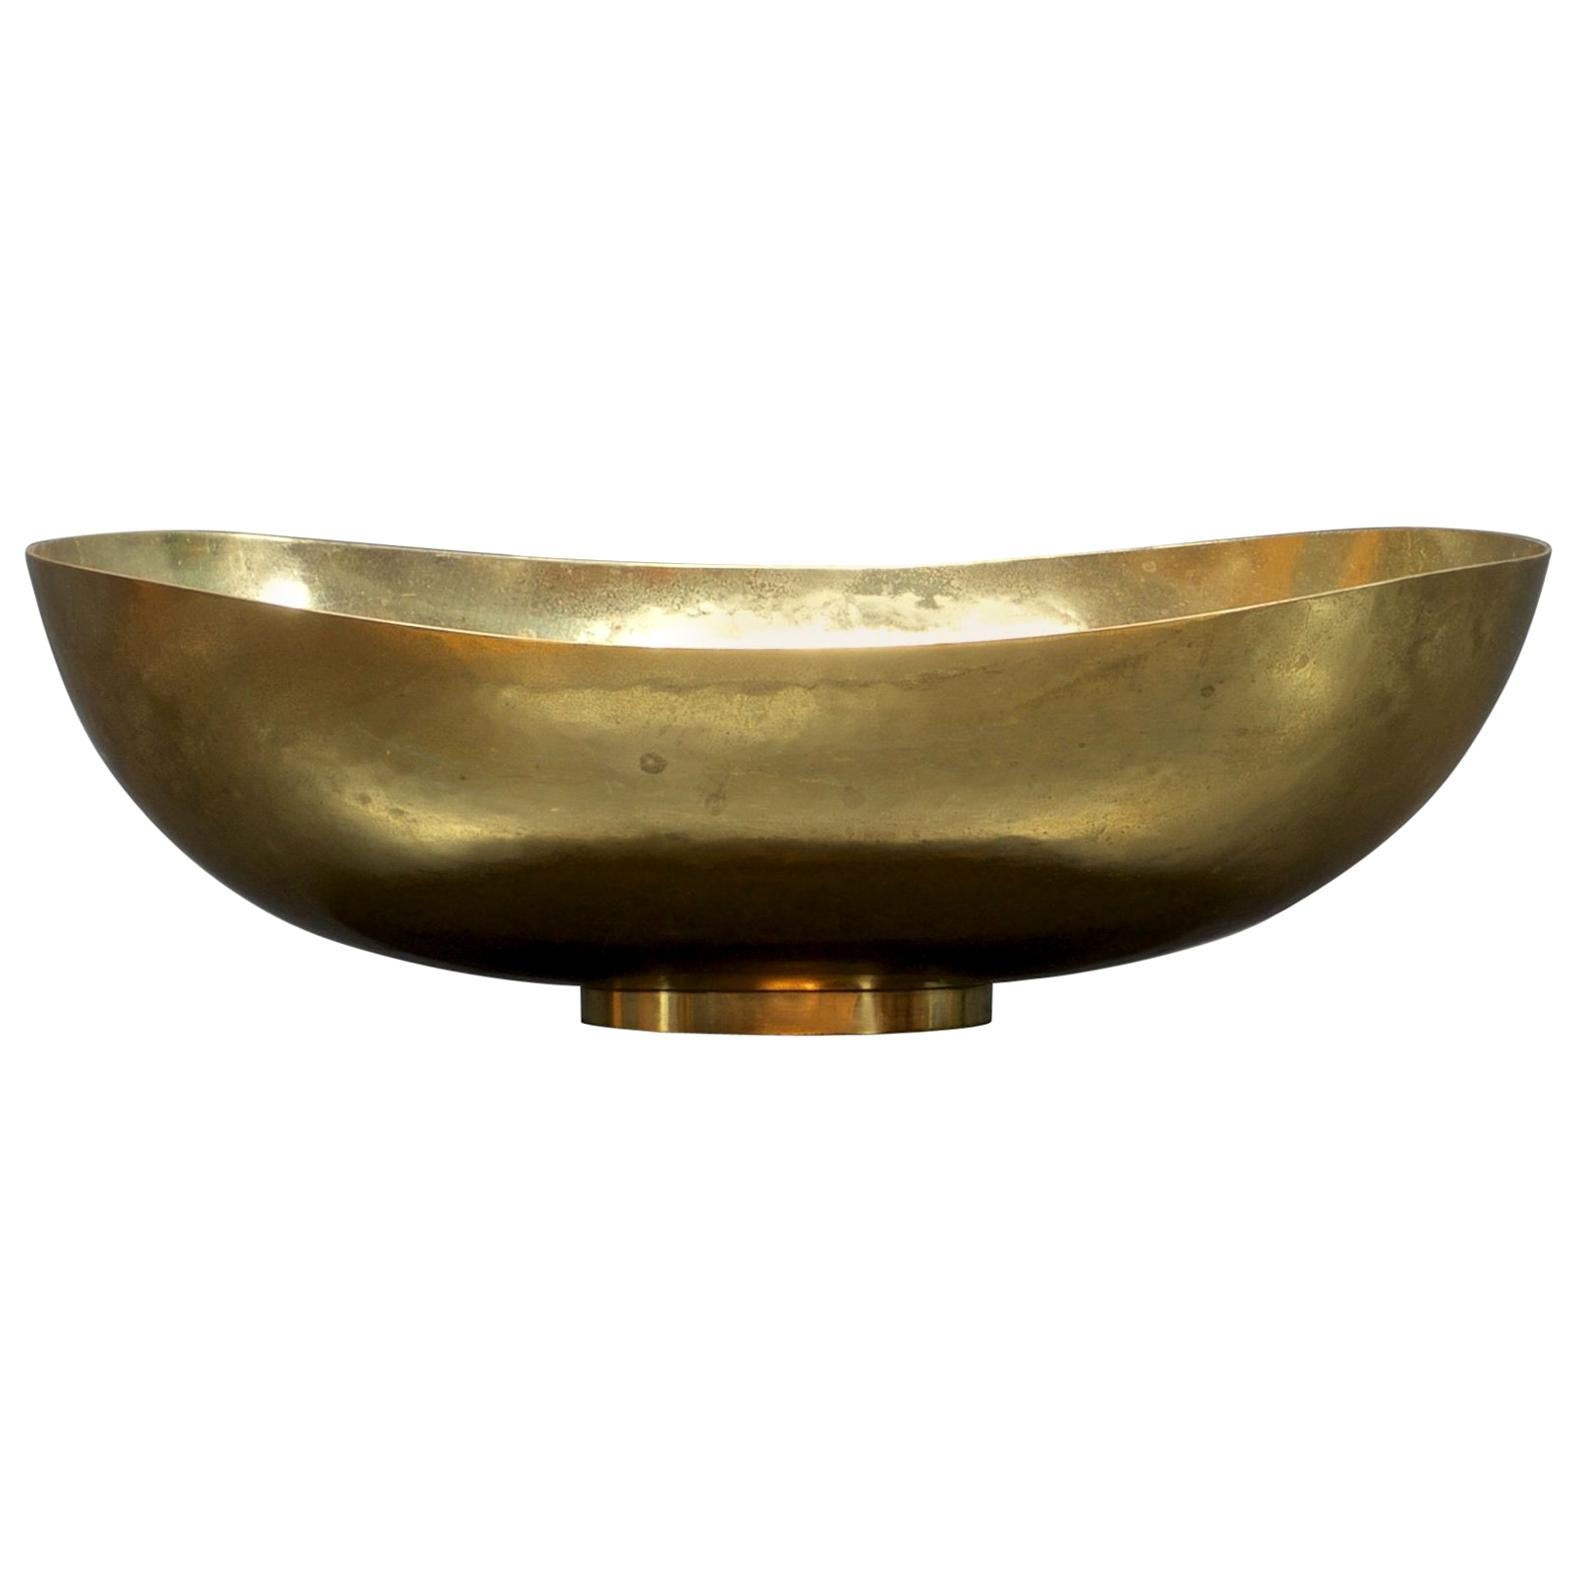 1930s Hand-Hammered Large Brass Bowl Hayno Focken Germany, Bauhaus Art Deco Era